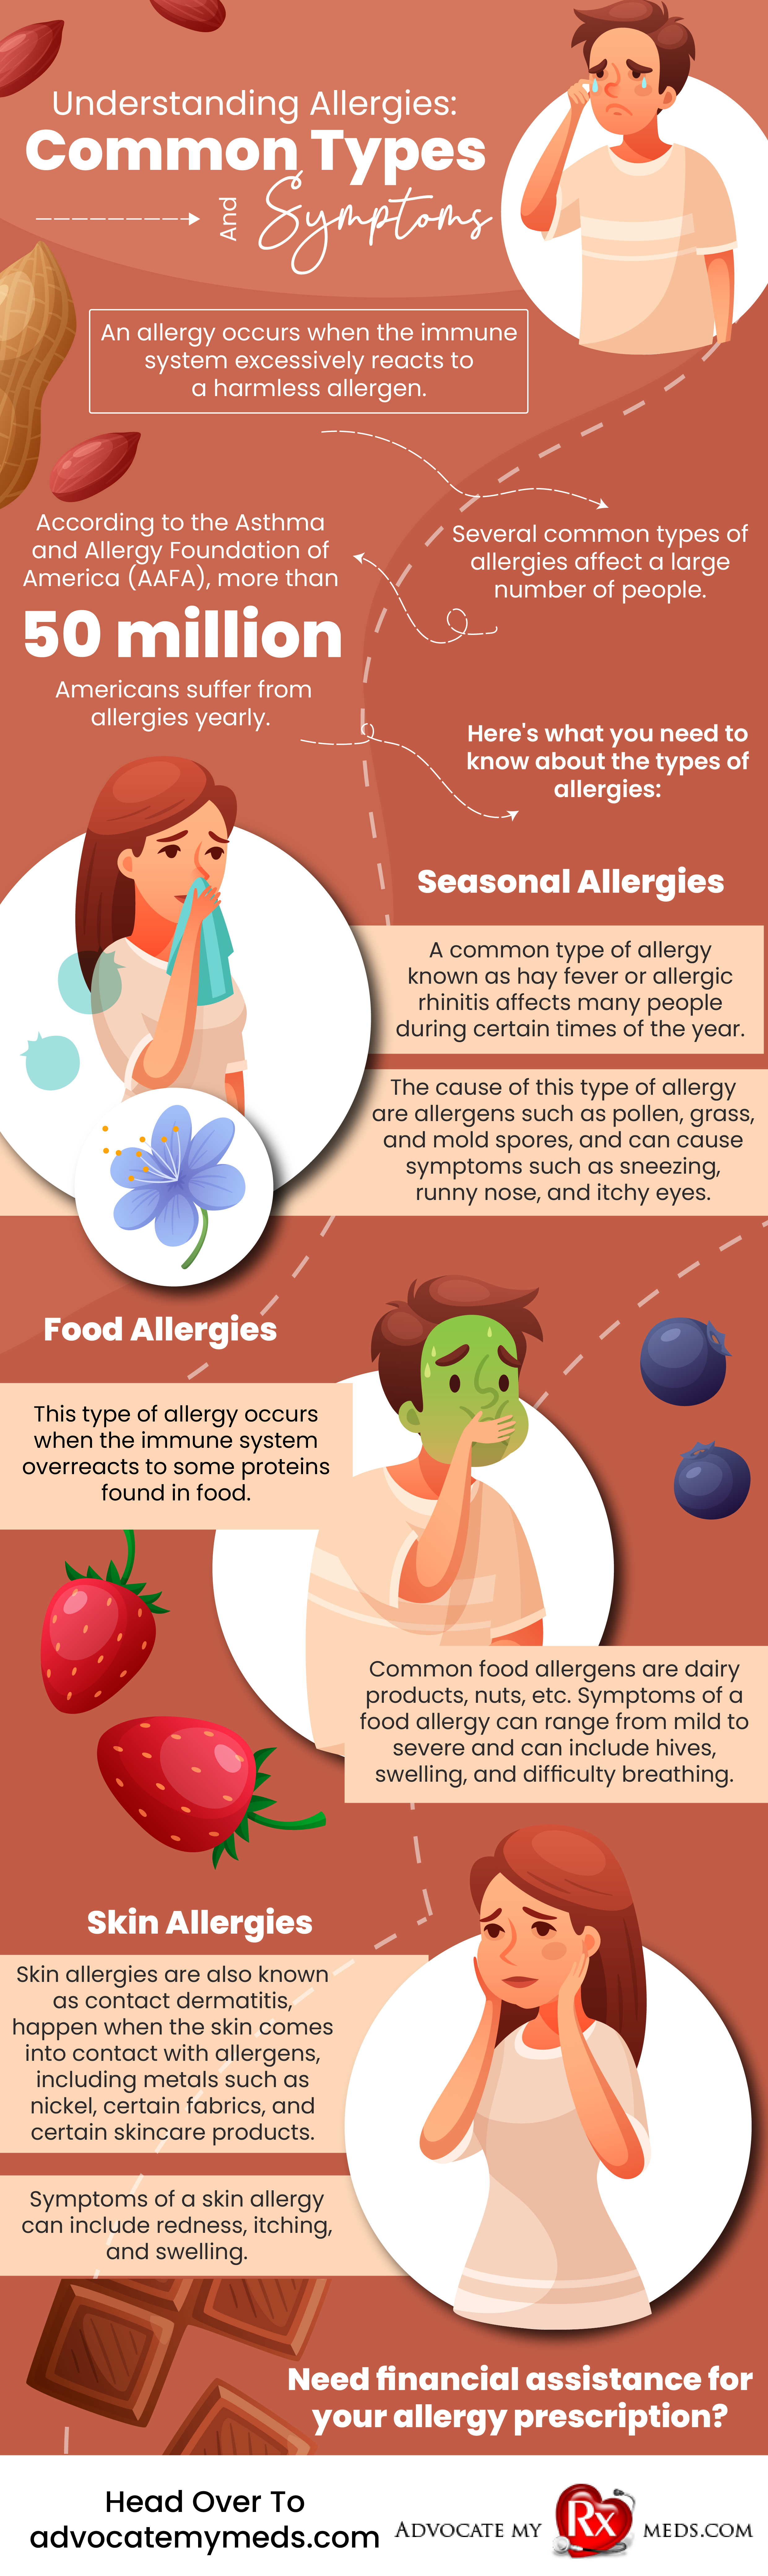 Understanding Allergies: Common Types and Symptoms